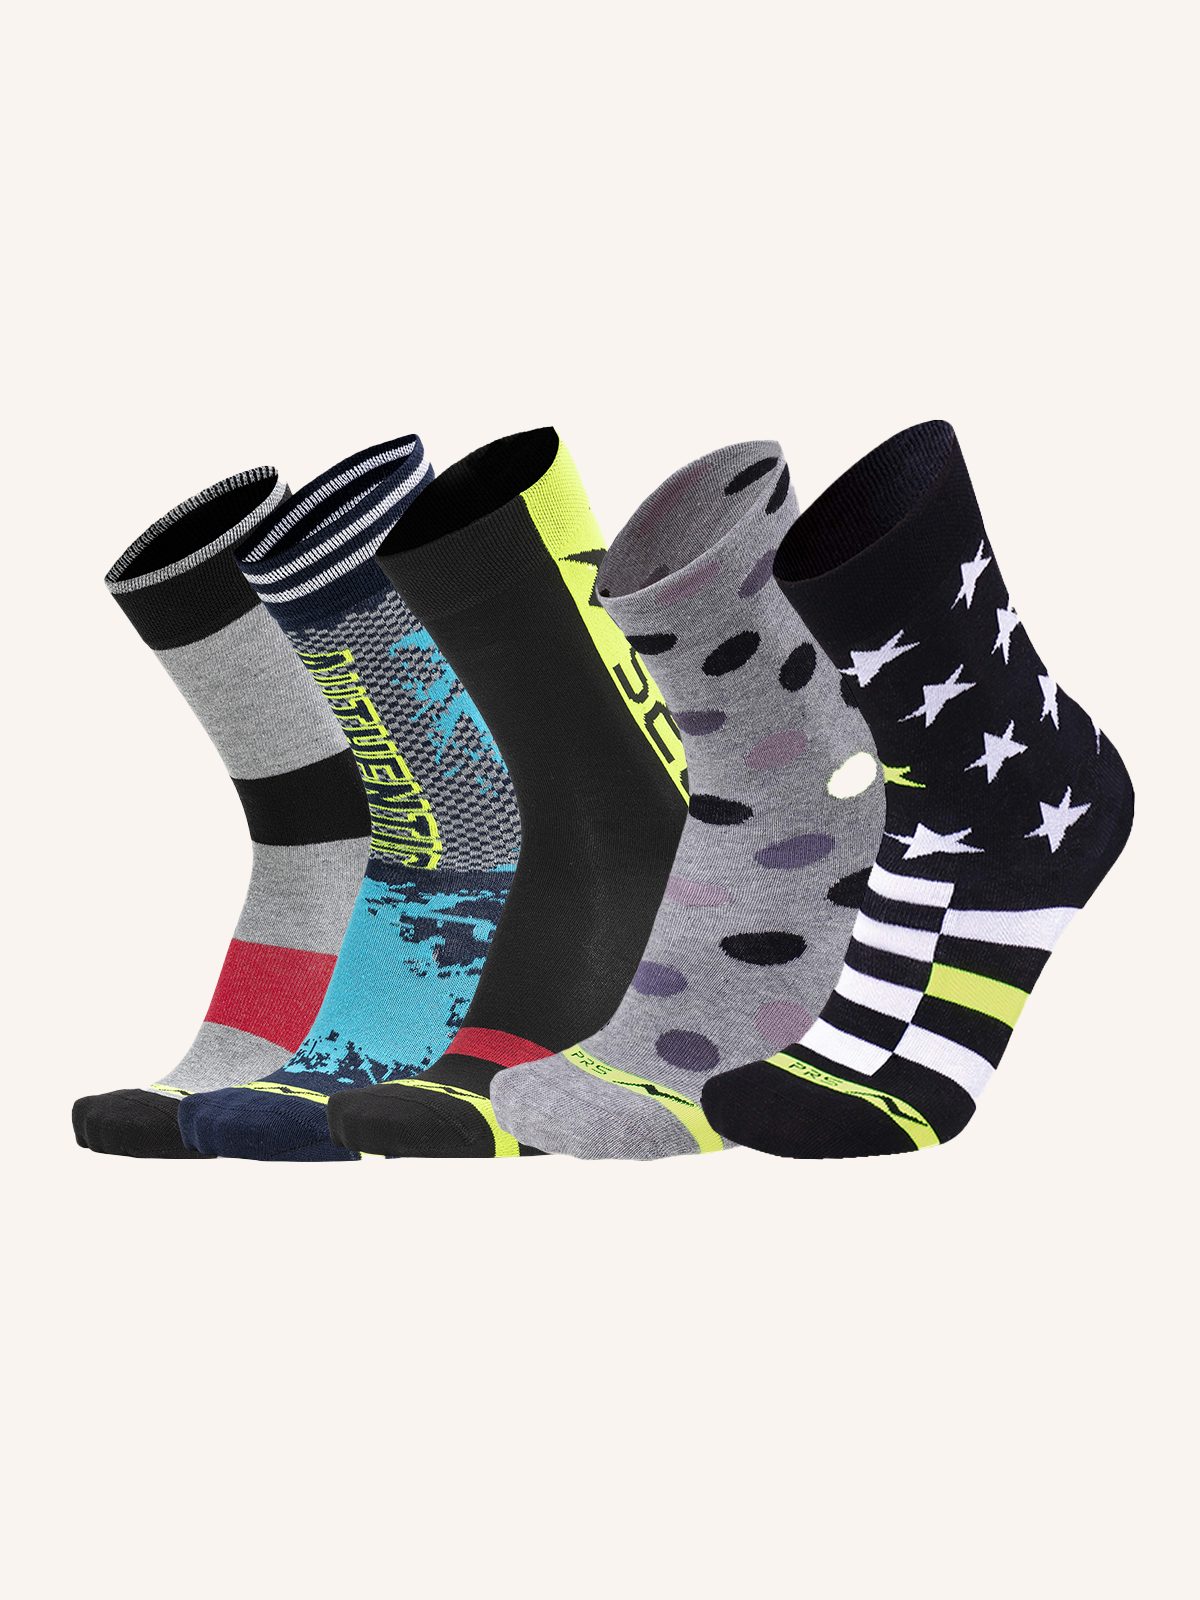 Short Cotton Socks for Men | Fantasy | Pack of 5 Pairs | Urban Socks PRS 04